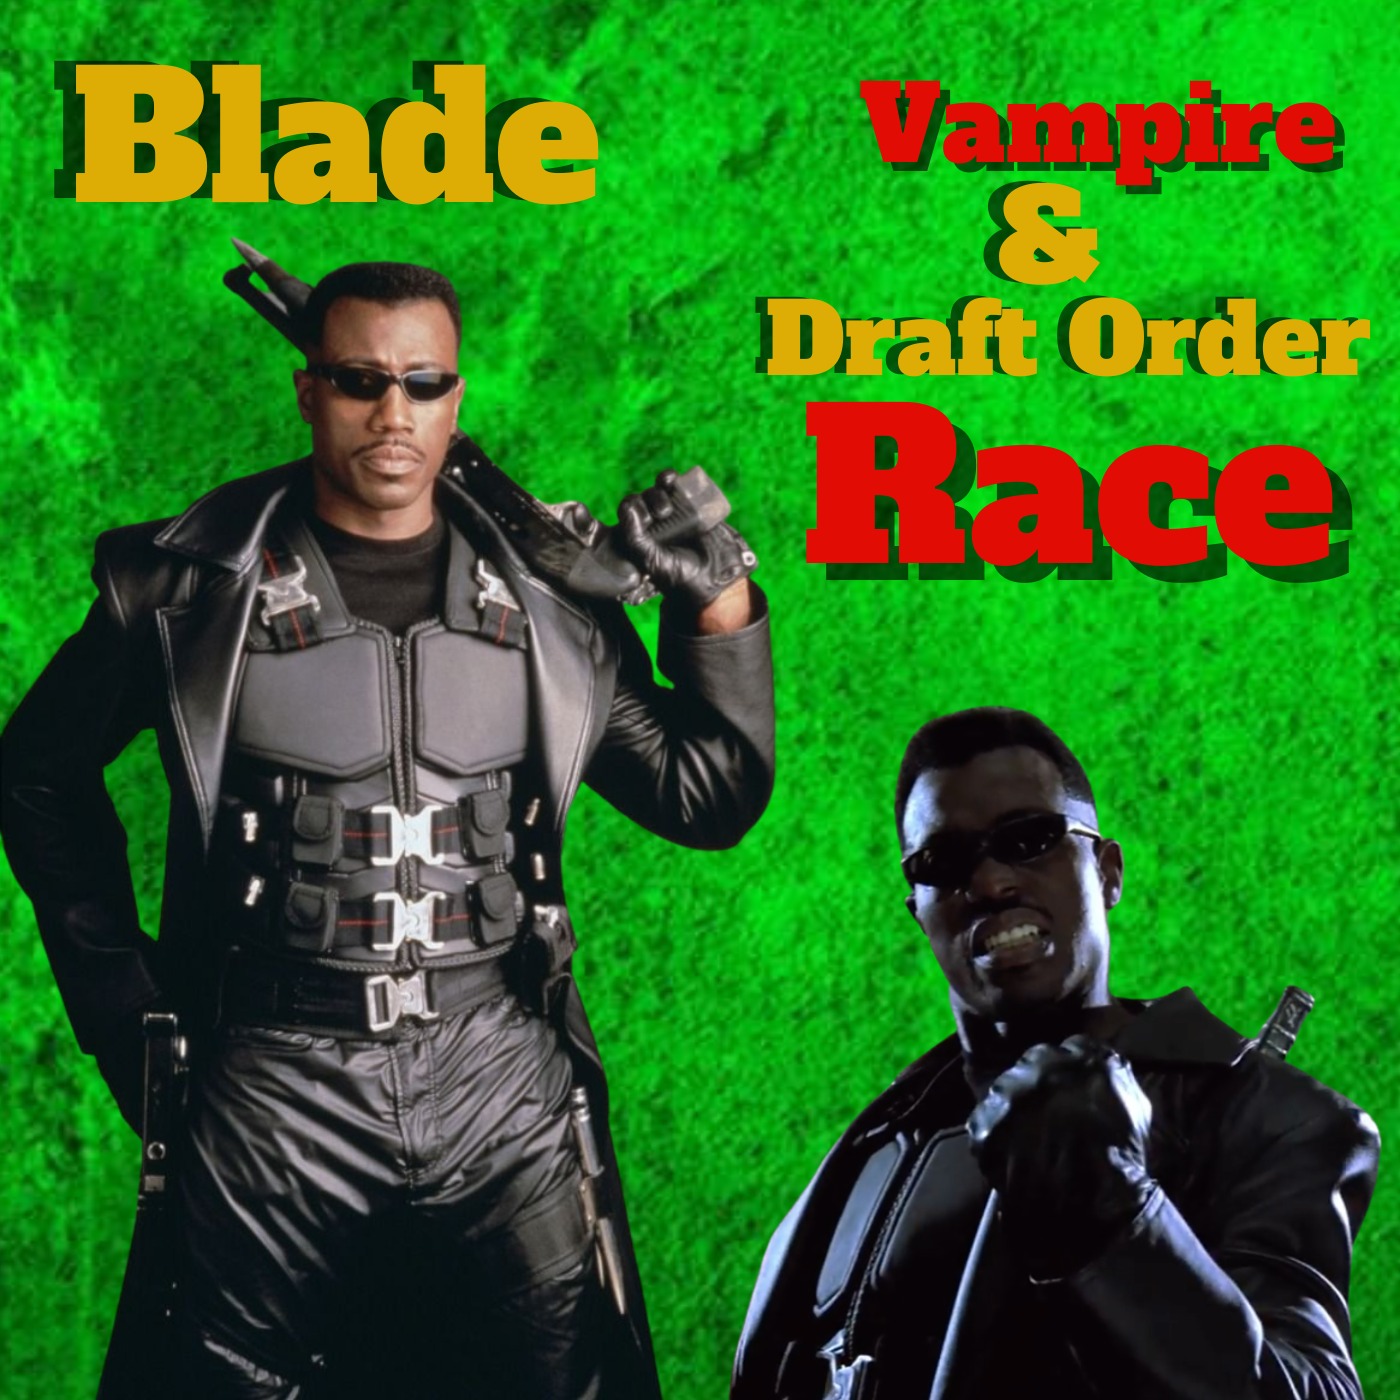 Blade Vampire League Vampire & Draft Order Race